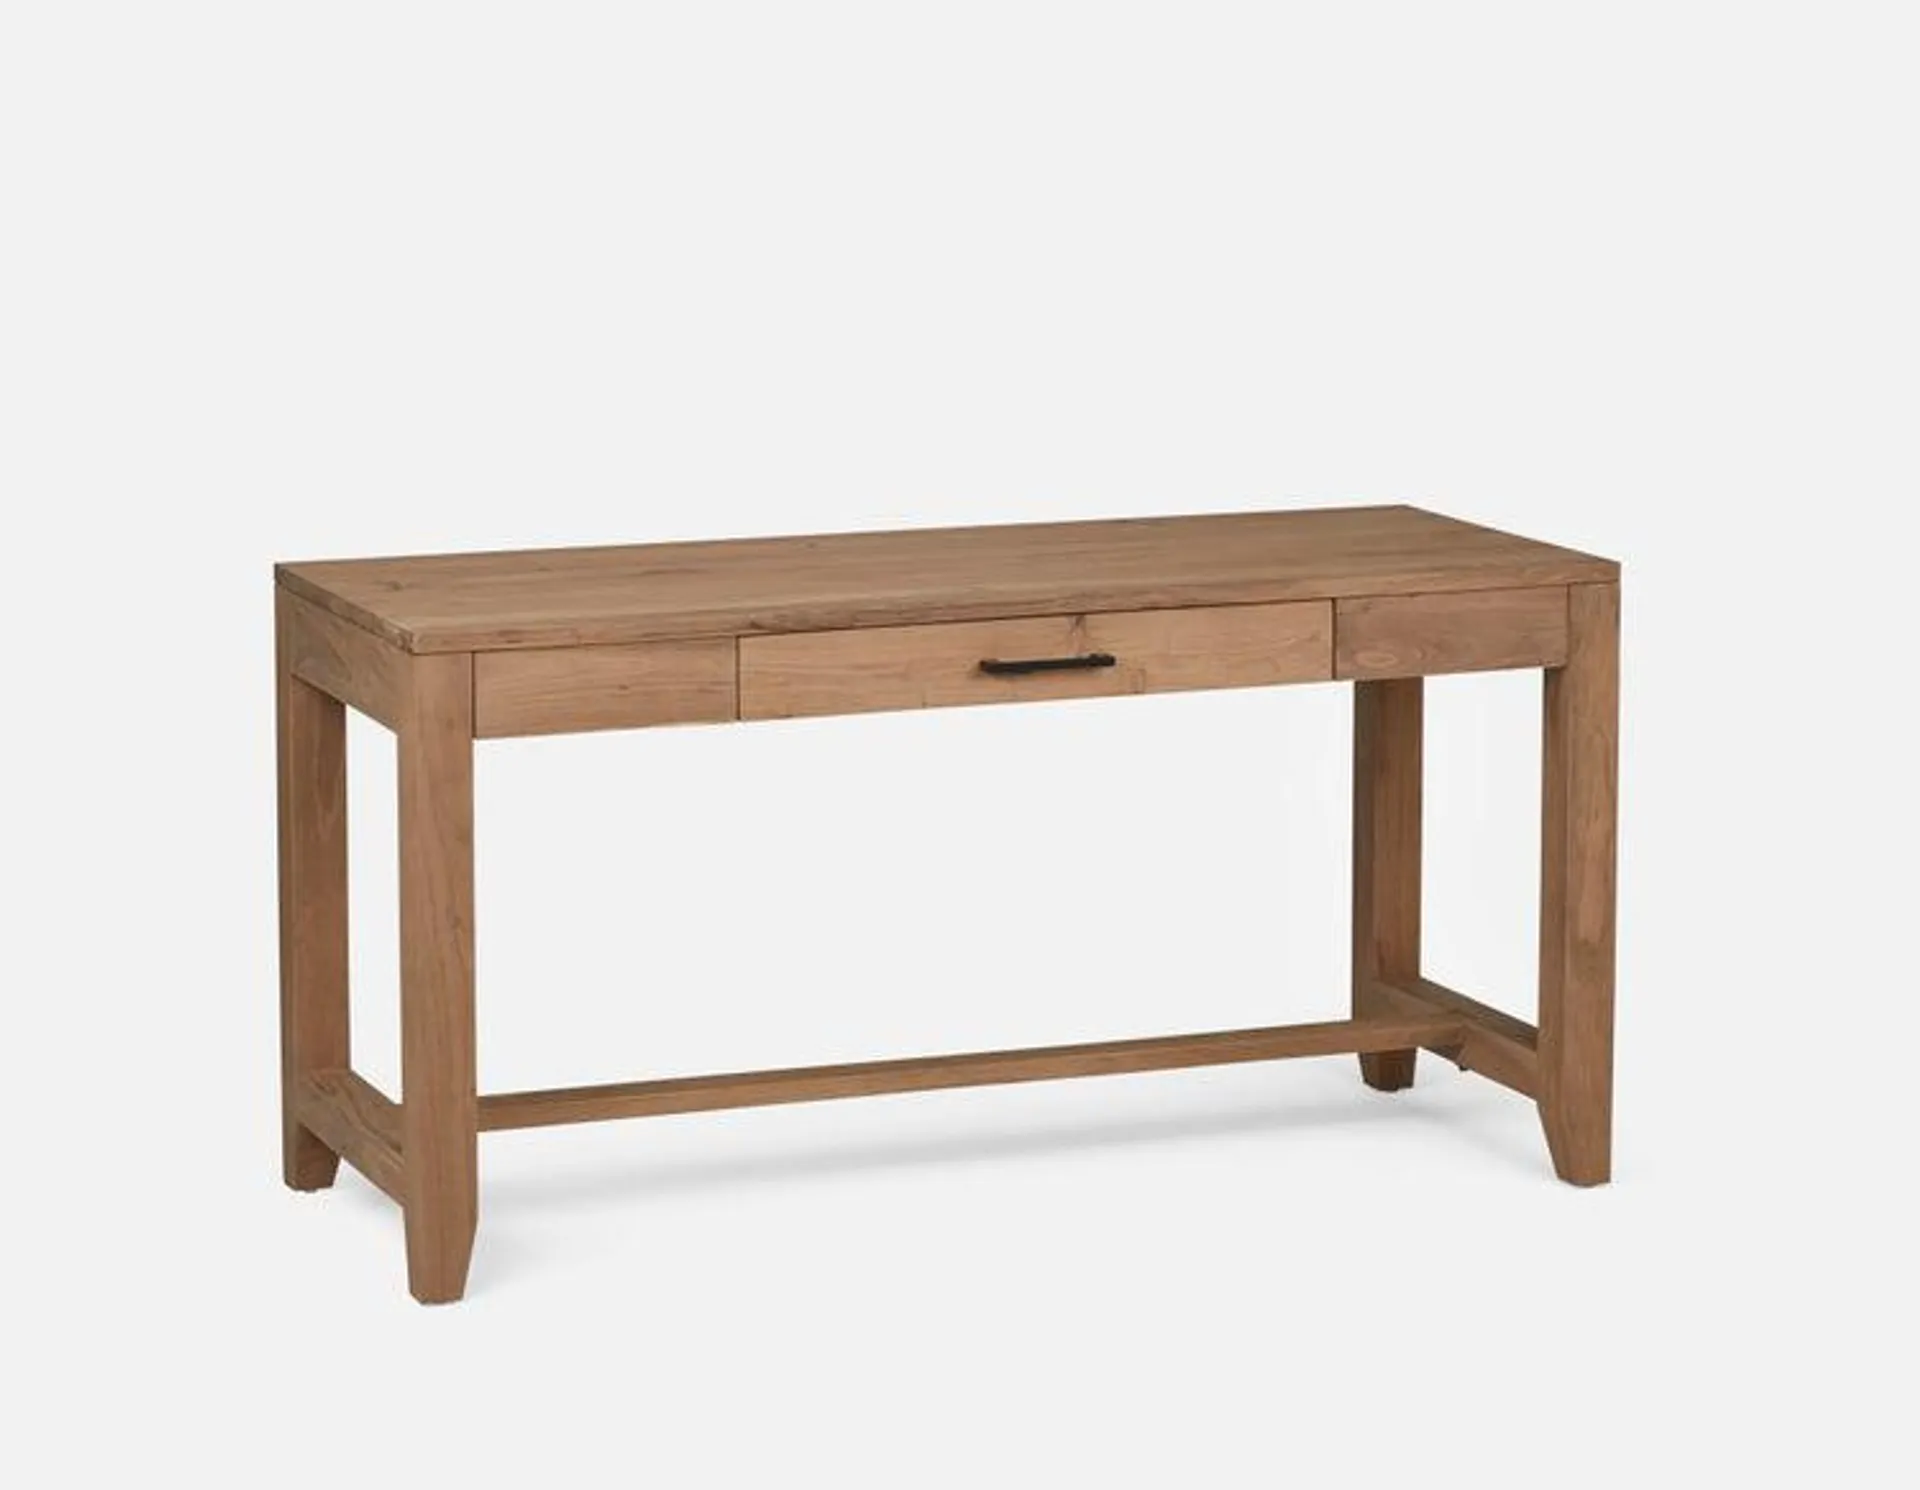 BAIYO acacia wood desk 150 cm